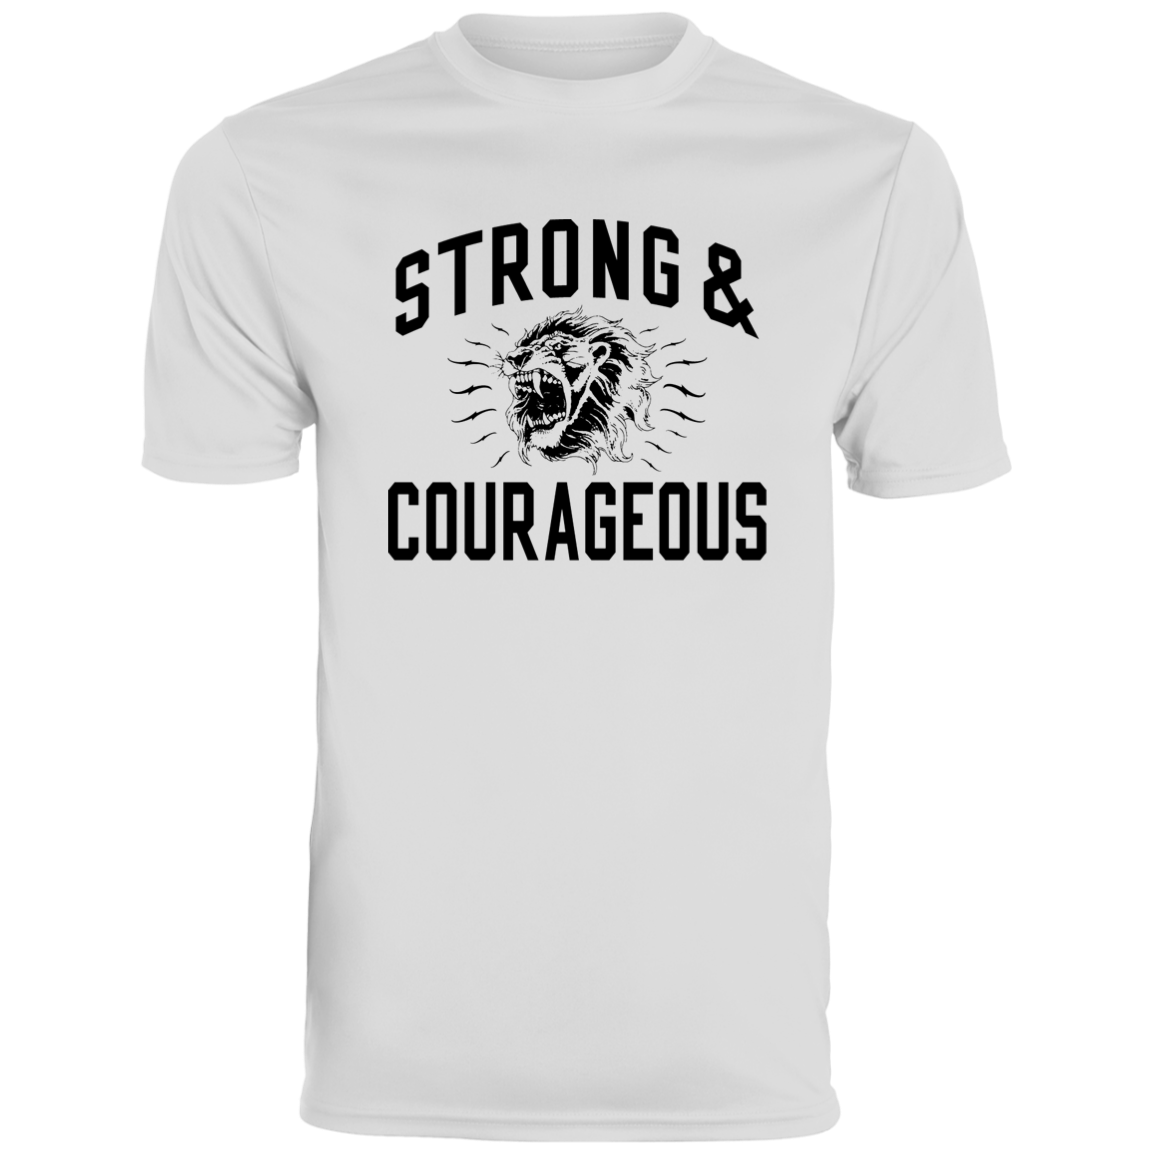 Strong & Courageous Men's Moisture-Wicking Tee